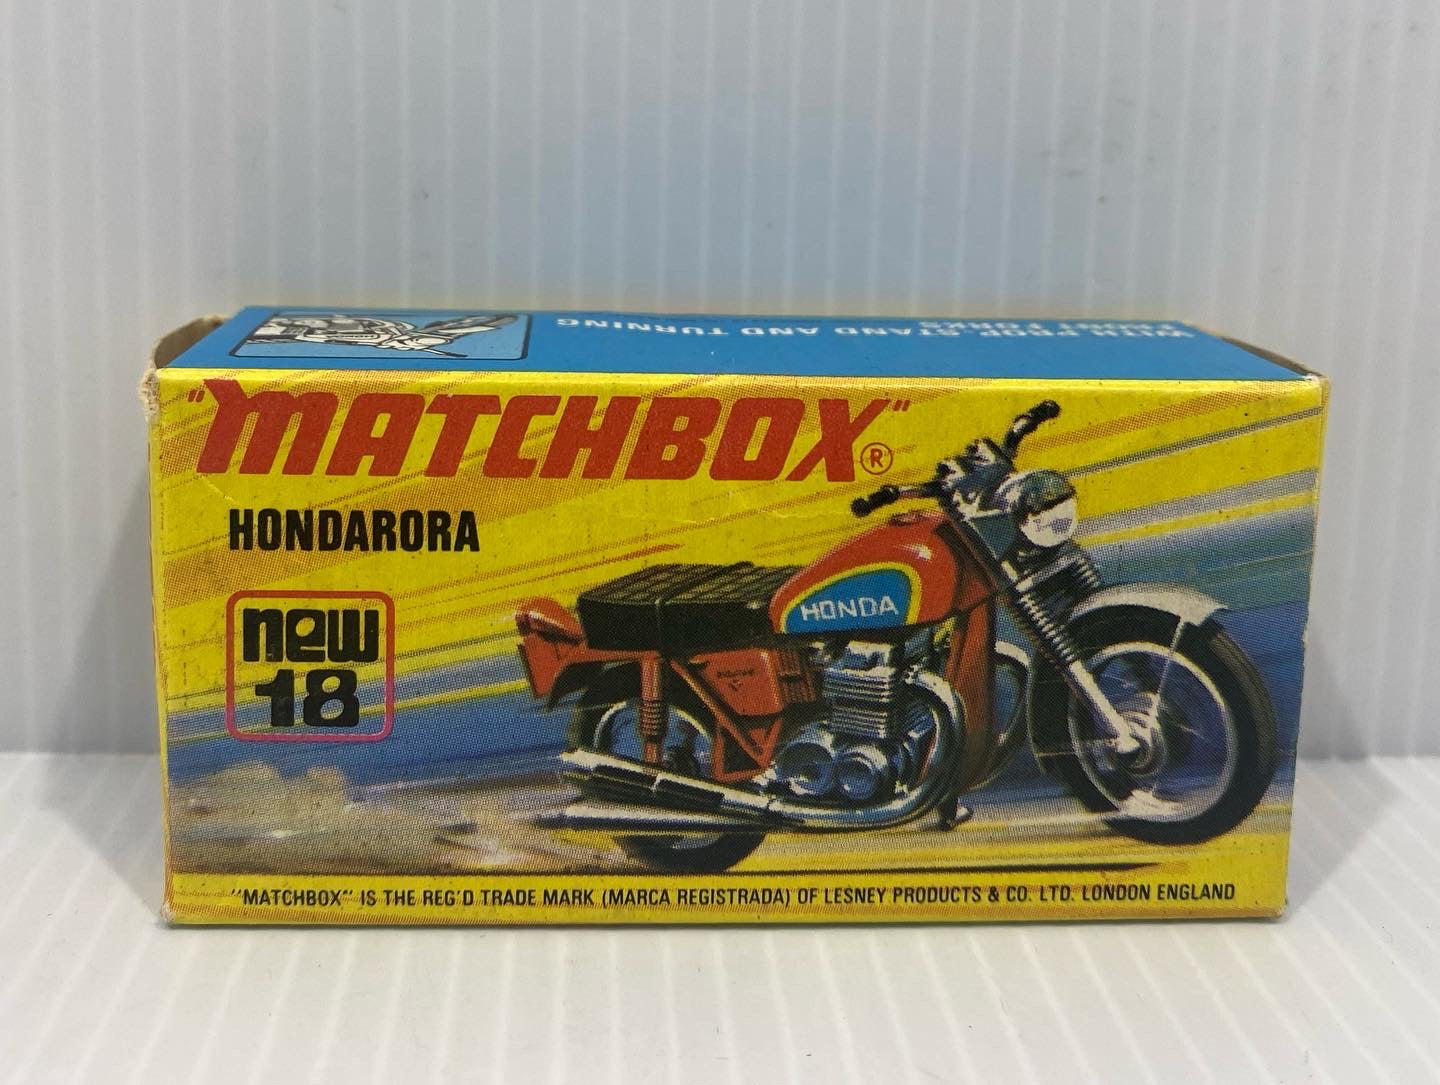 Hondarora - Matchbox MB18 1975-1984. With original box